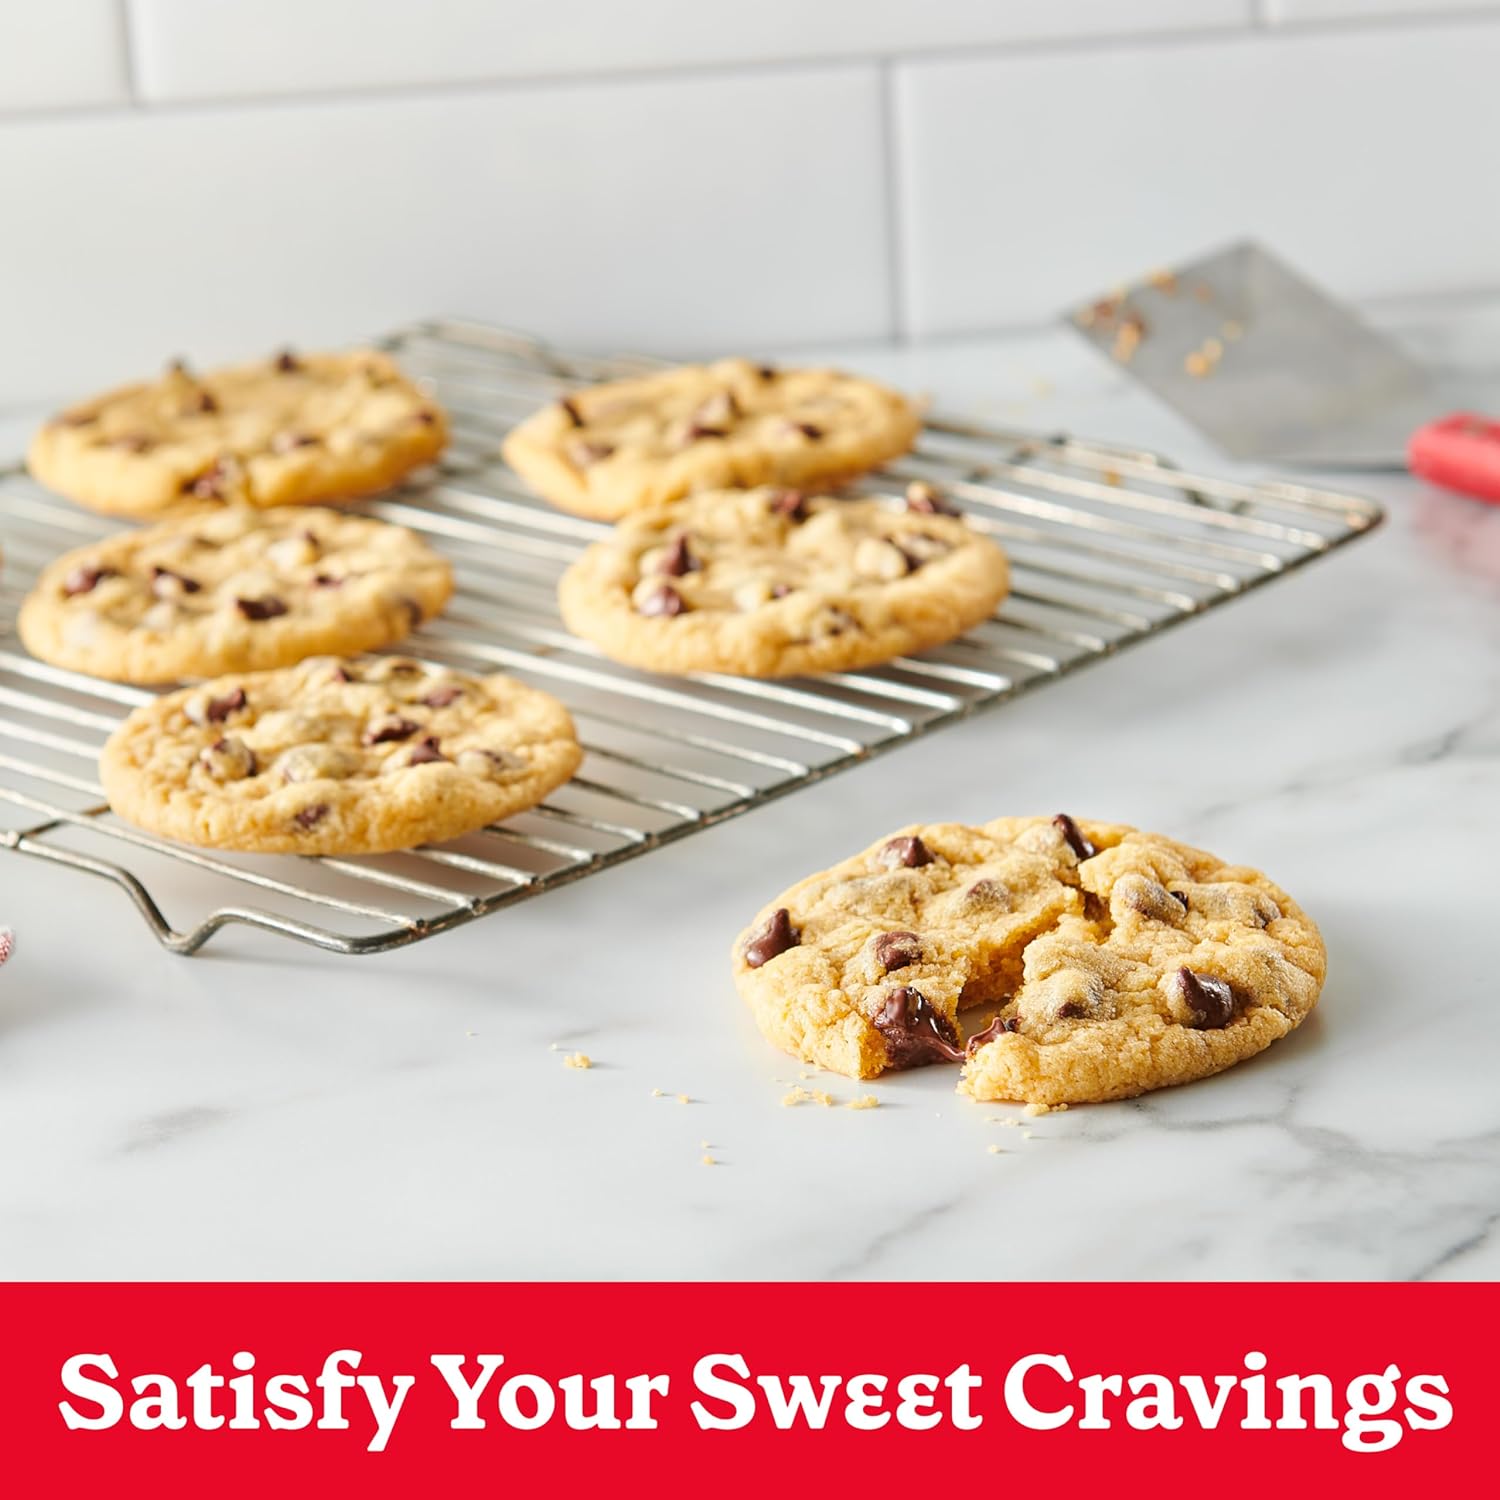 Betty Crocker Lower Sugar Cookie, Chocolate Chip Cookies, No Artificial Sweeteners, 13.1 oz : Everything Else